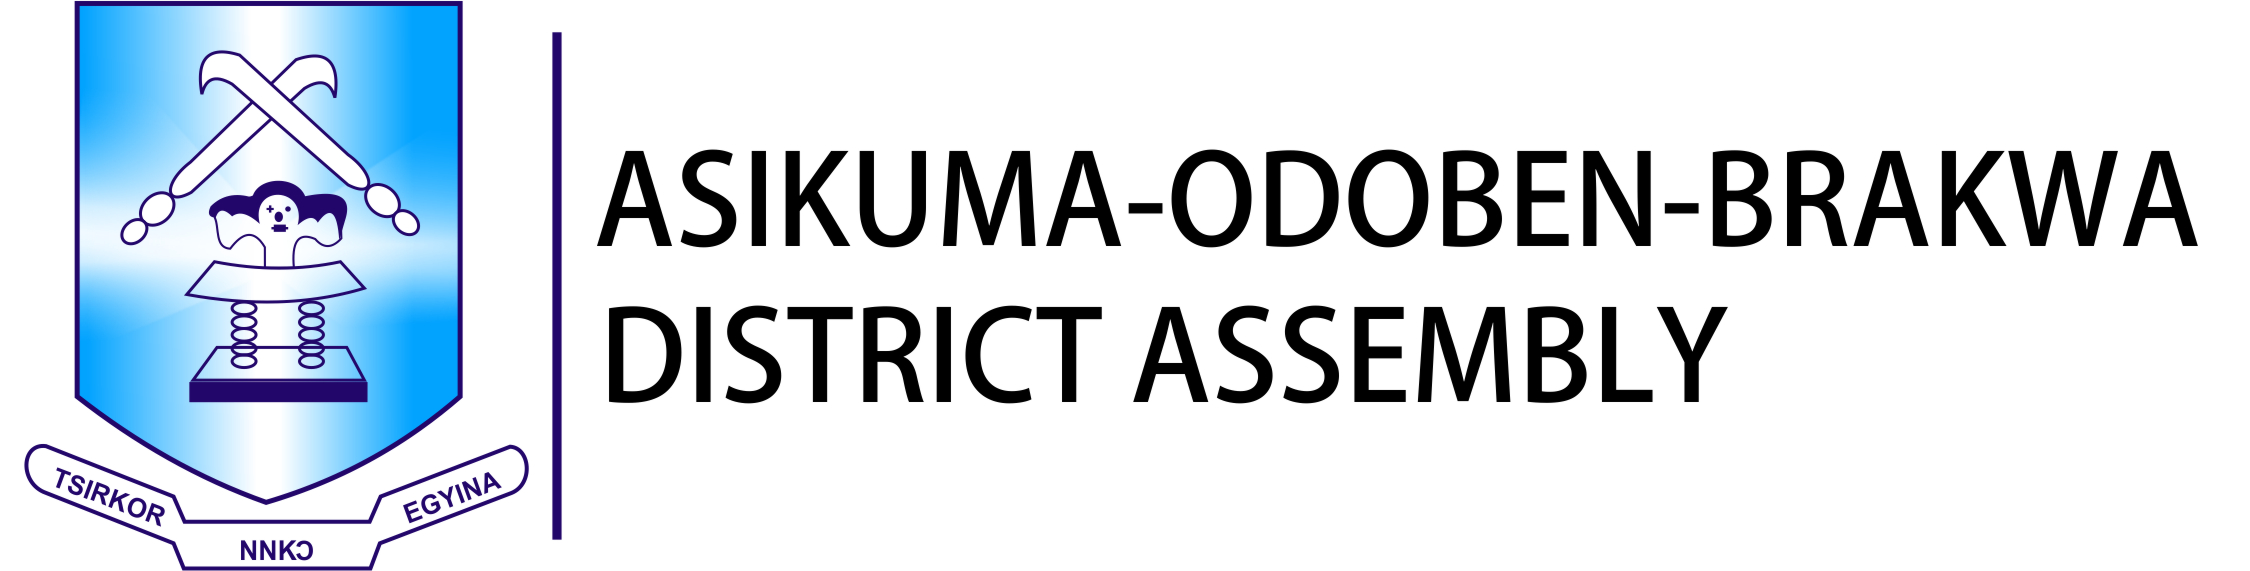 Asikuma-Odoben-Brakwa District Assembly